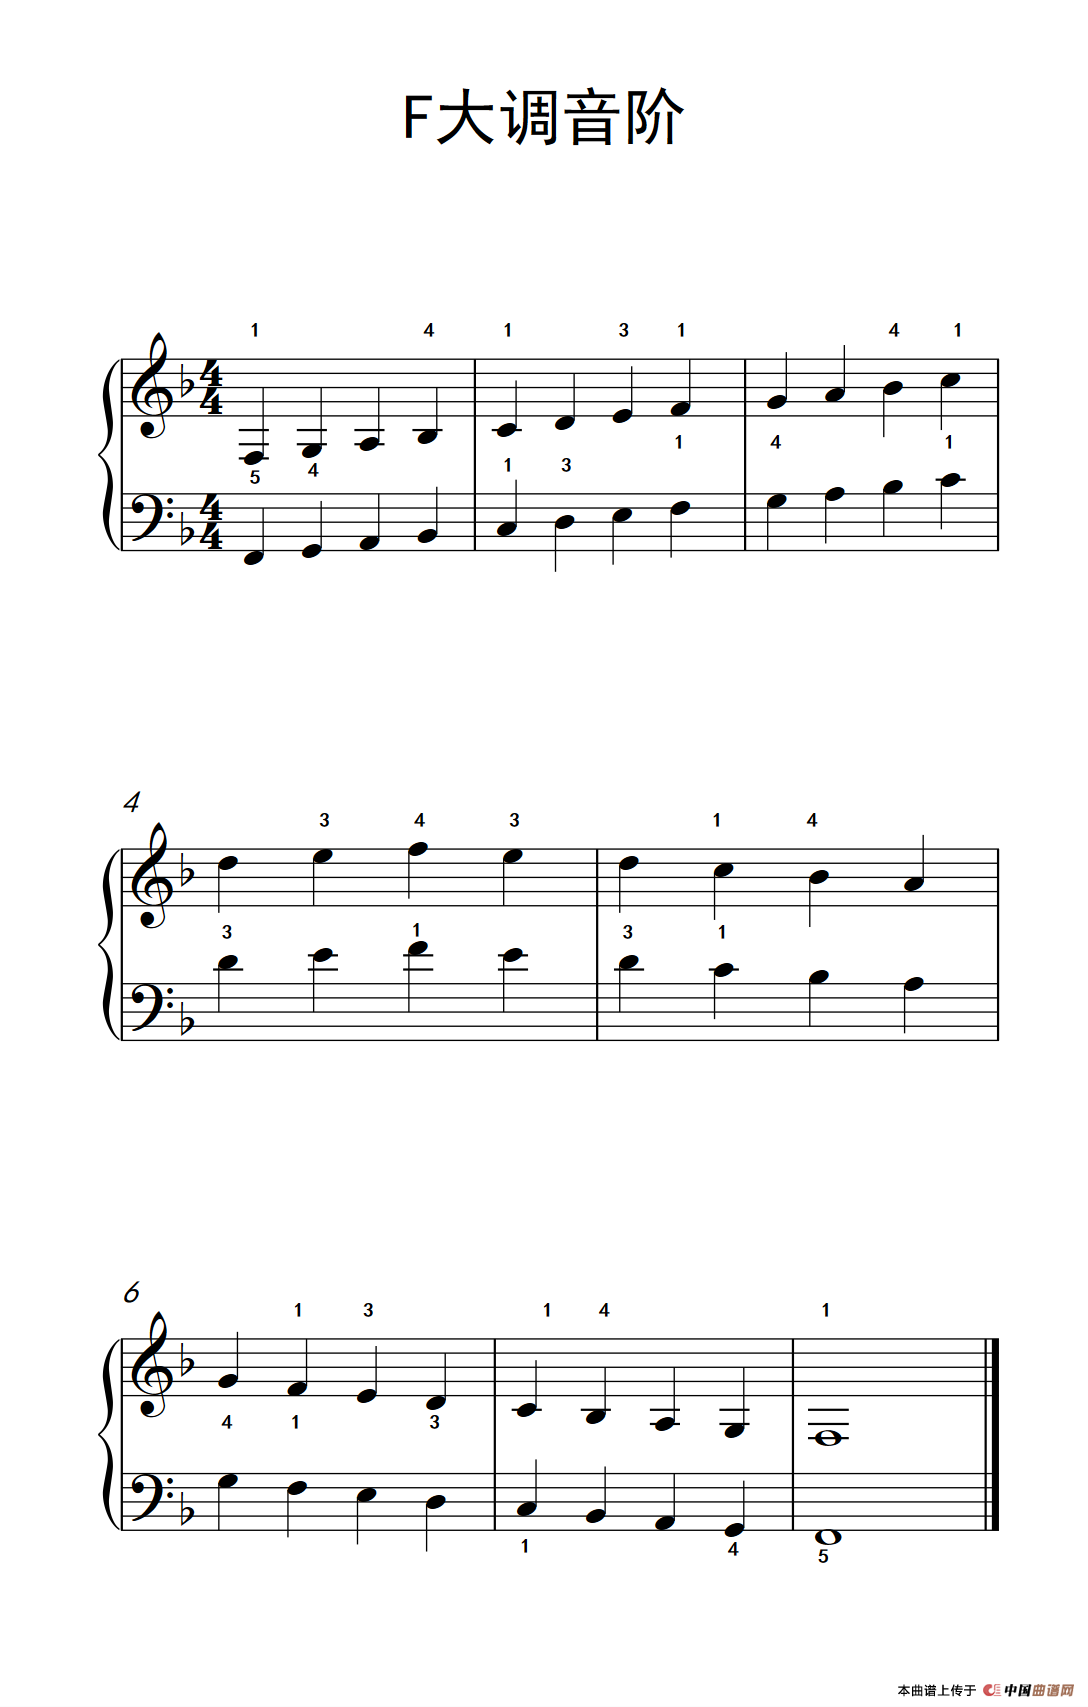 f大调音阶(儿童钢琴练习曲(1)_196_39_1.png